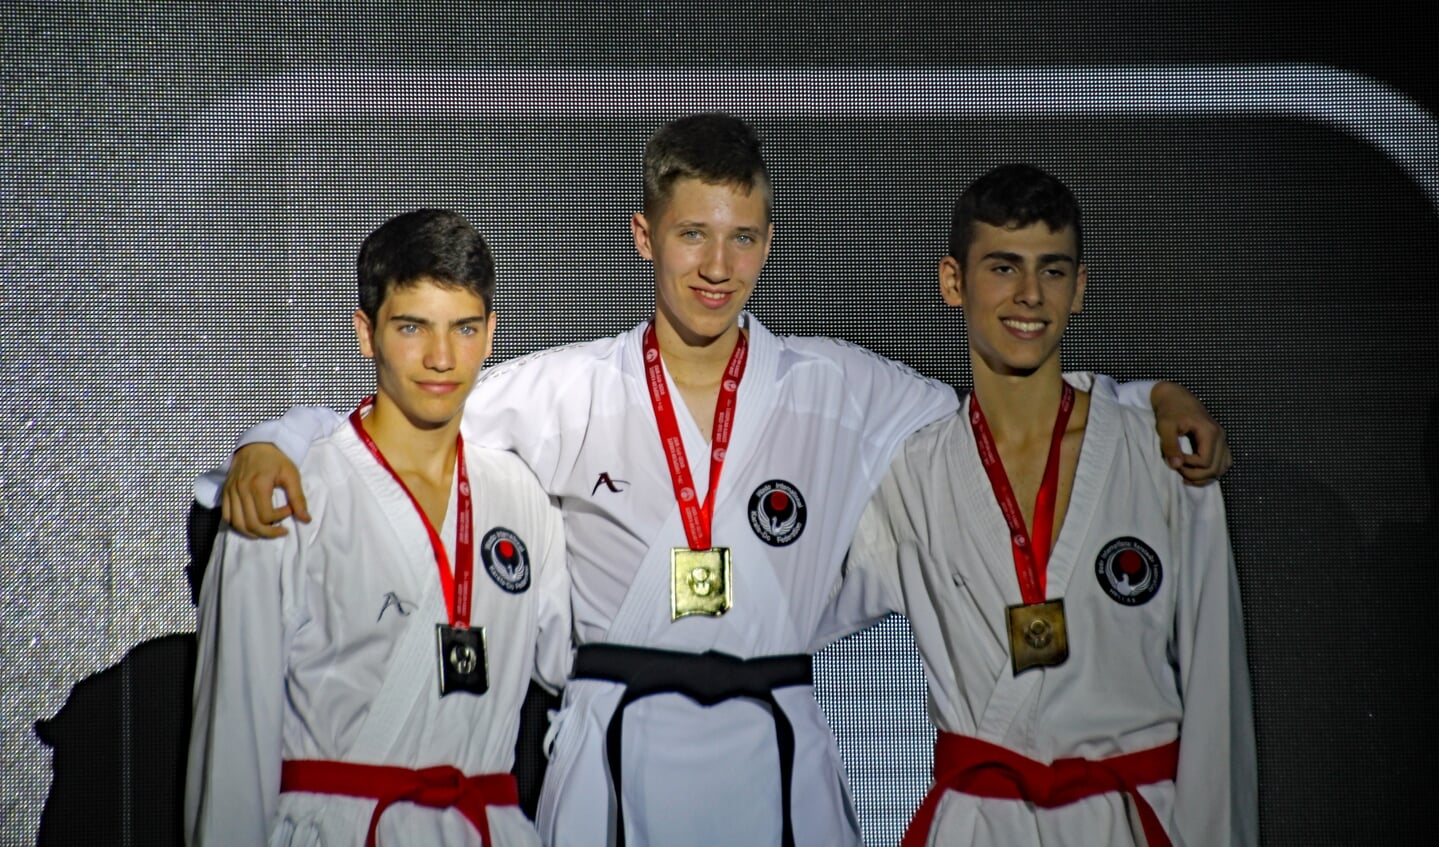 Julian Nobbe wint Europese titel EK karate Wado-Ryu